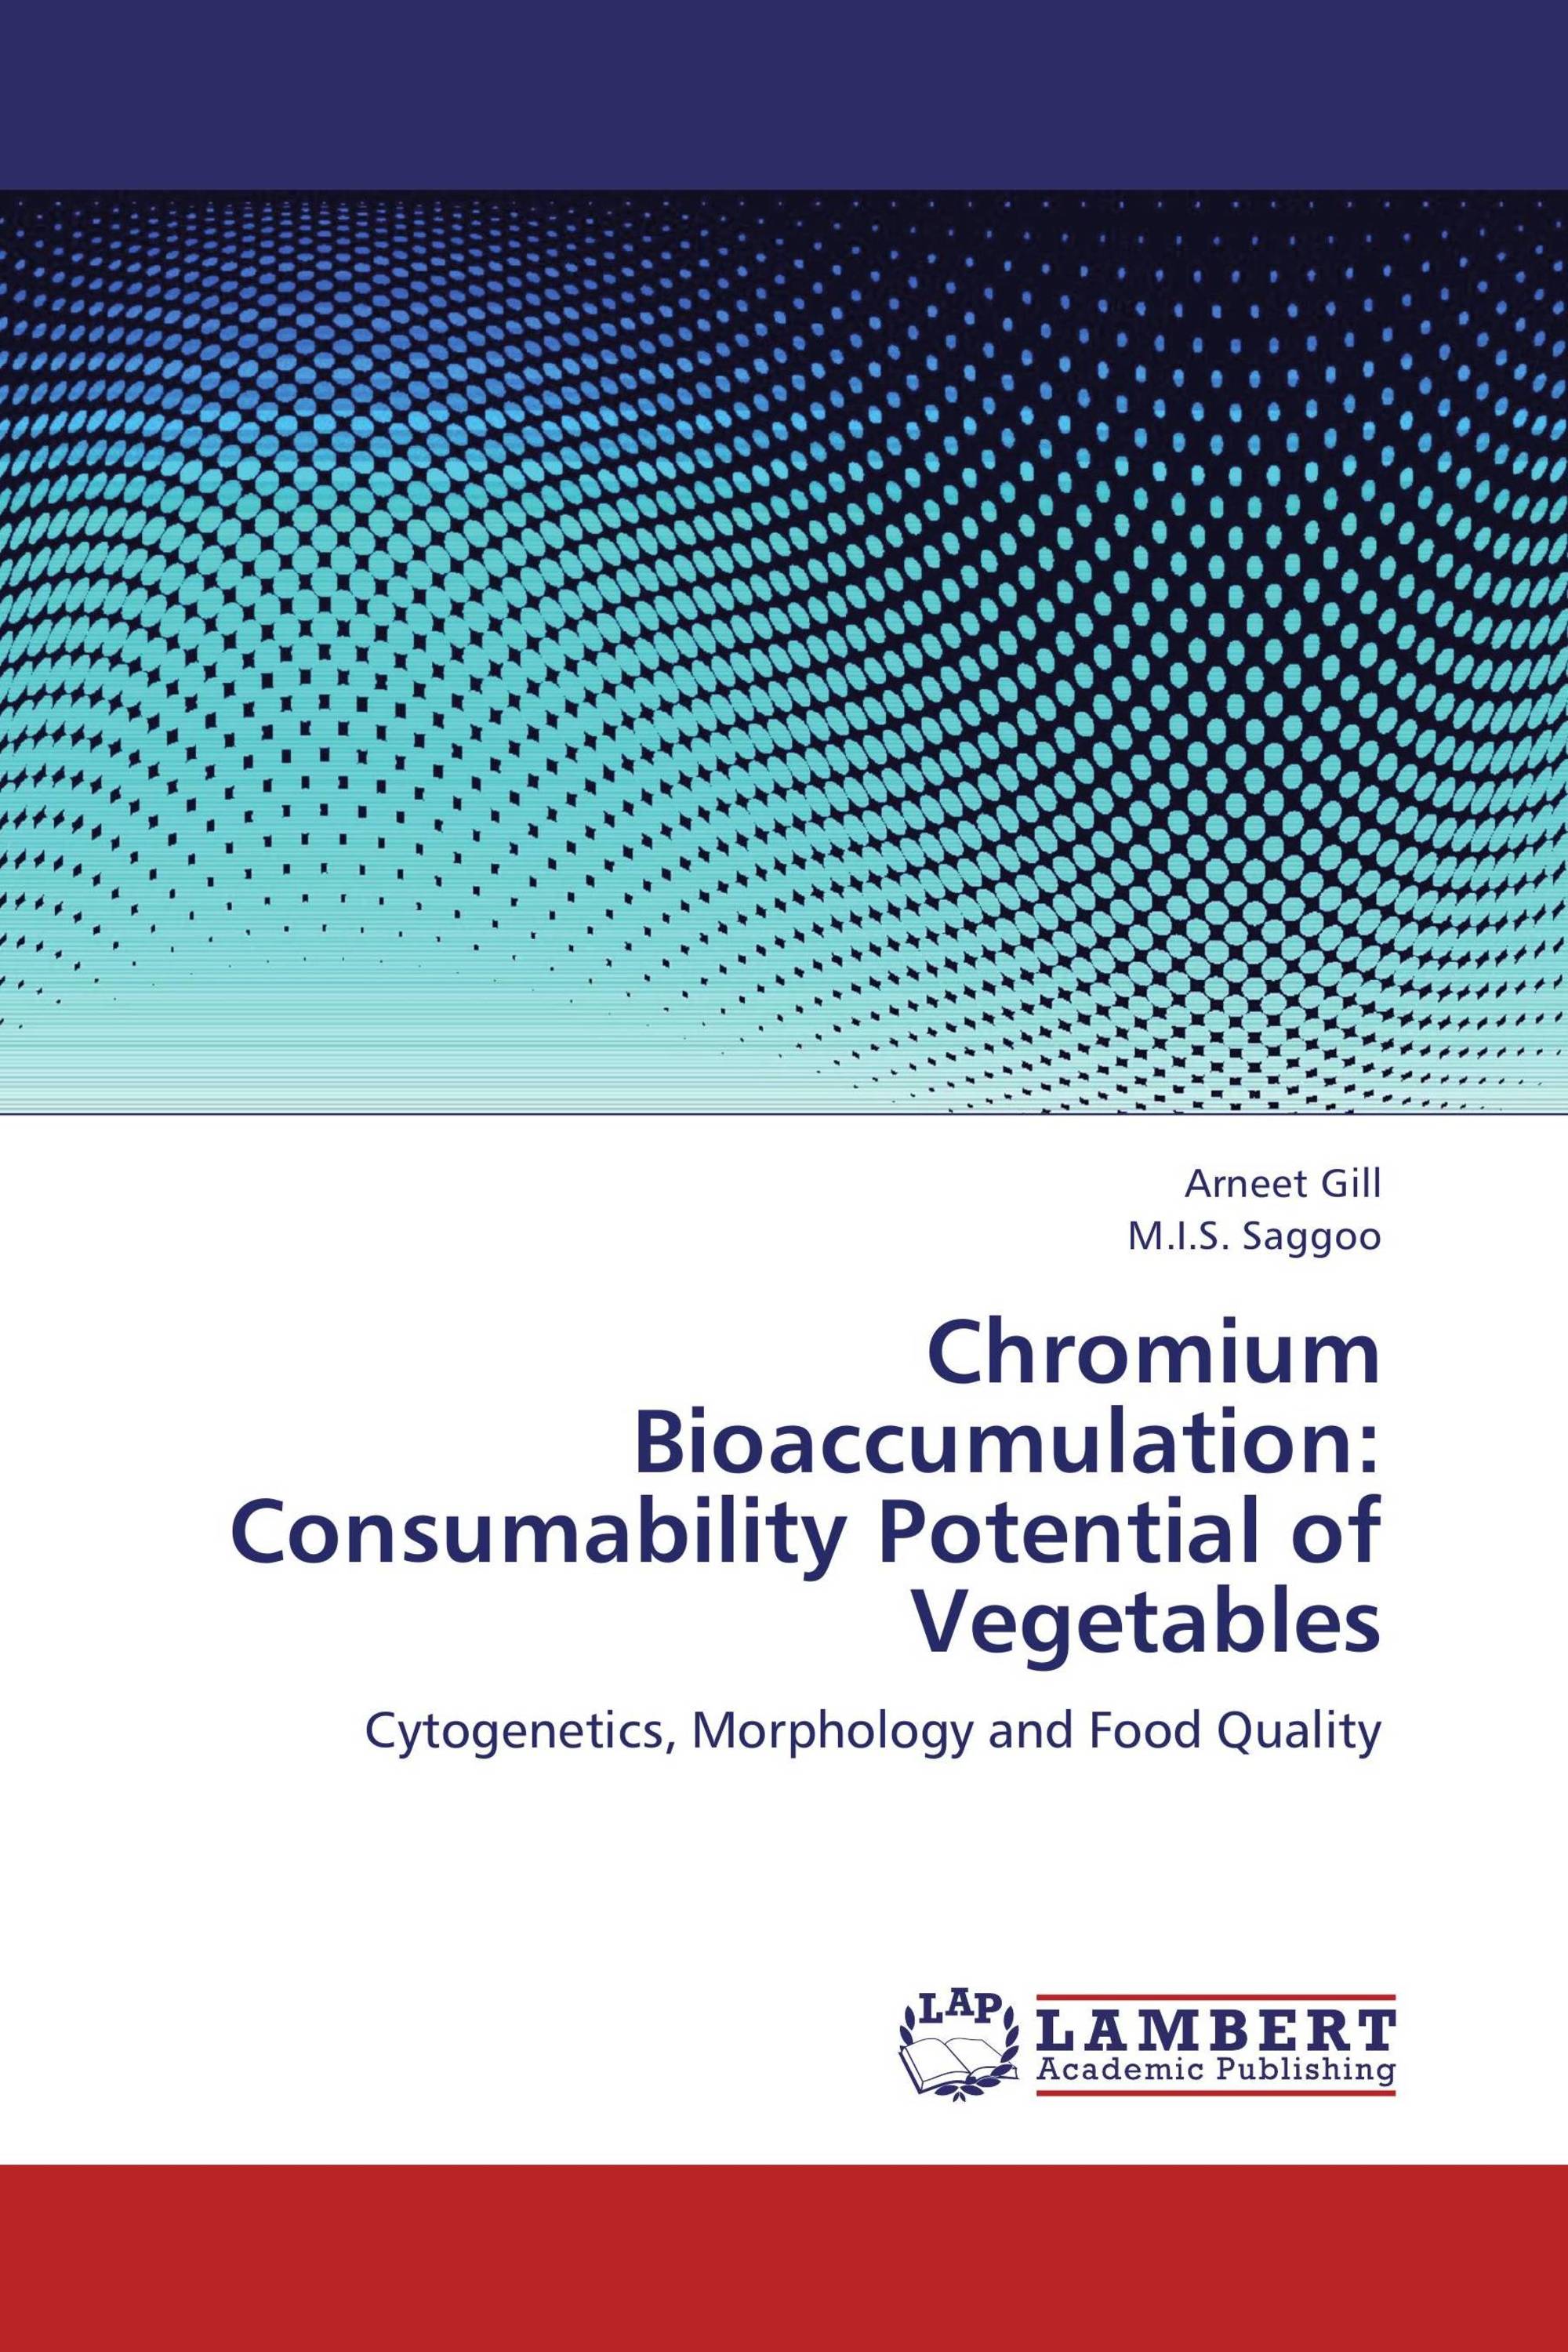 vegetables high in chromium